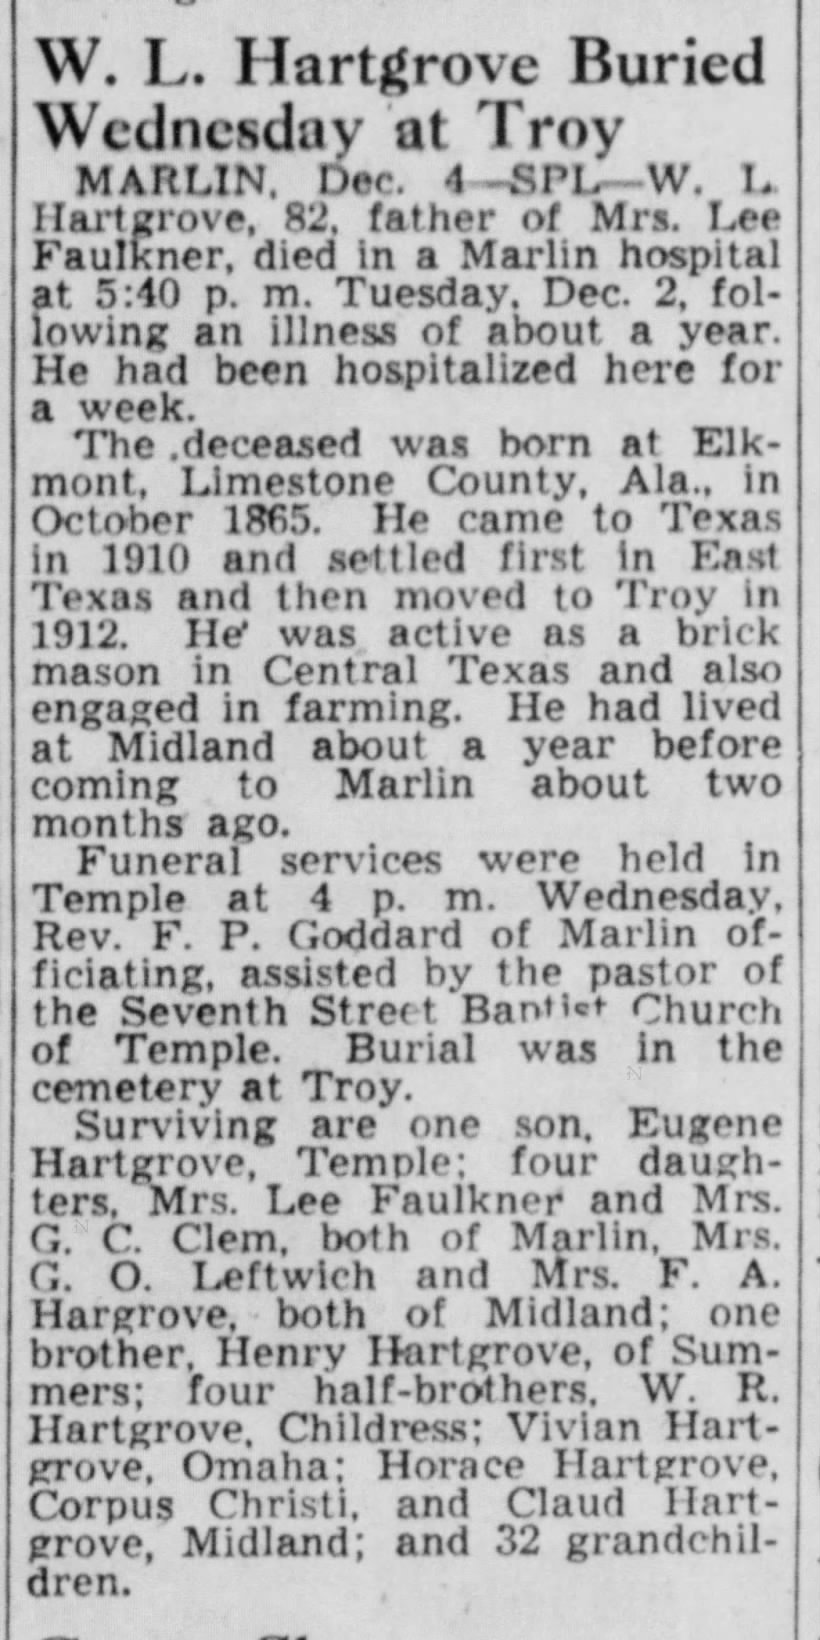 William Logan Hartgrove, The Waco News-Tribune (Waco, Texas, 5 Dec 1947 pg. 11